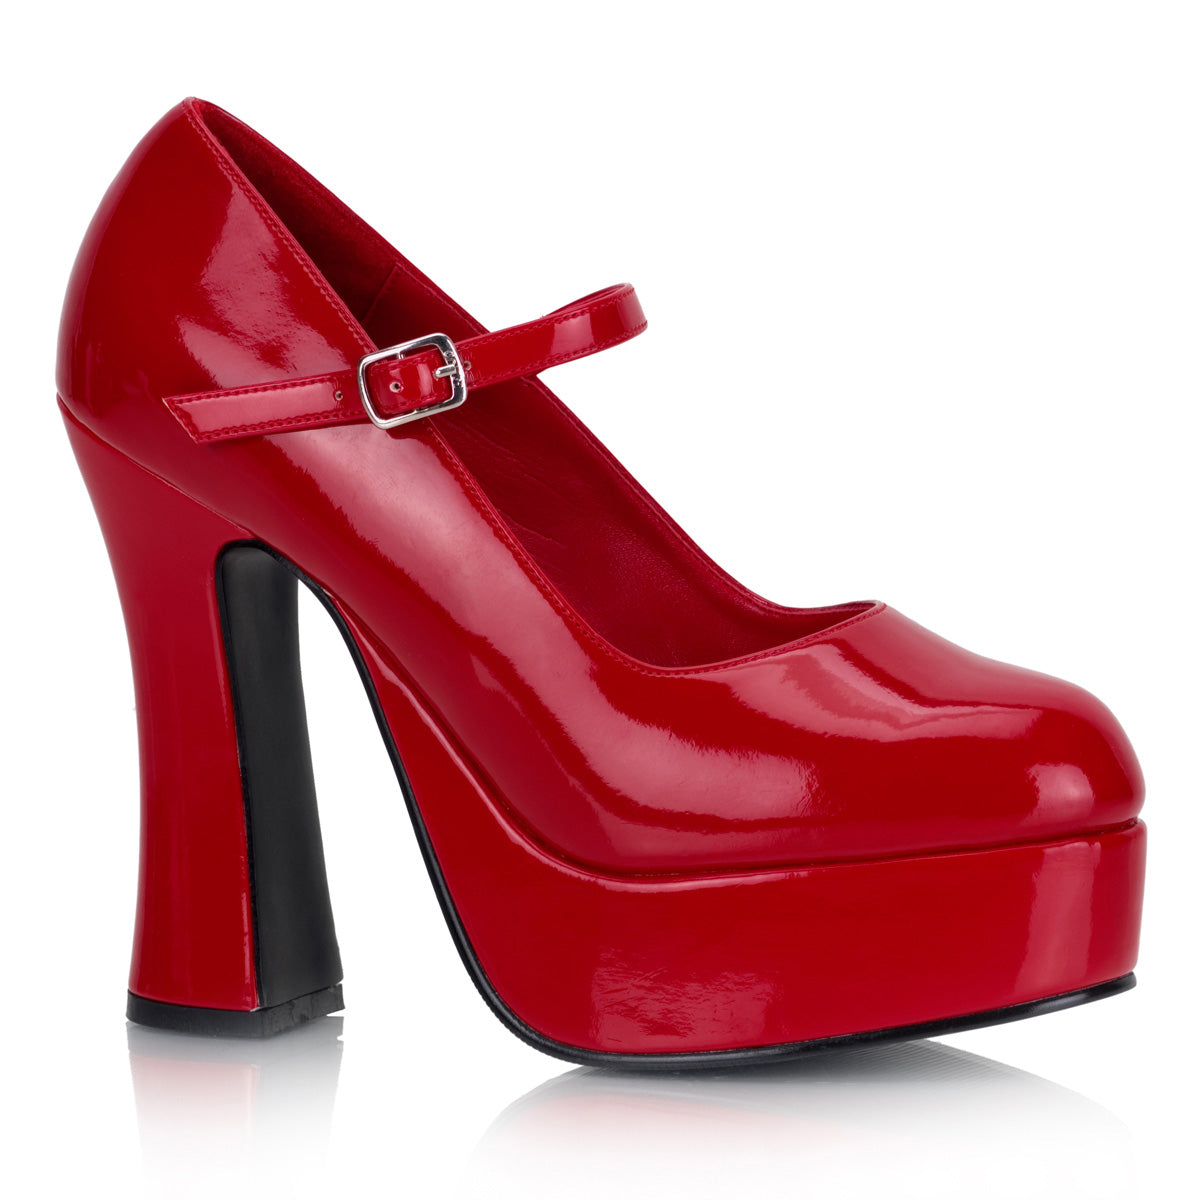 DOLLY-50 Alternative Footwear Demonia Women's Heels & Platform Shoes Red Pat